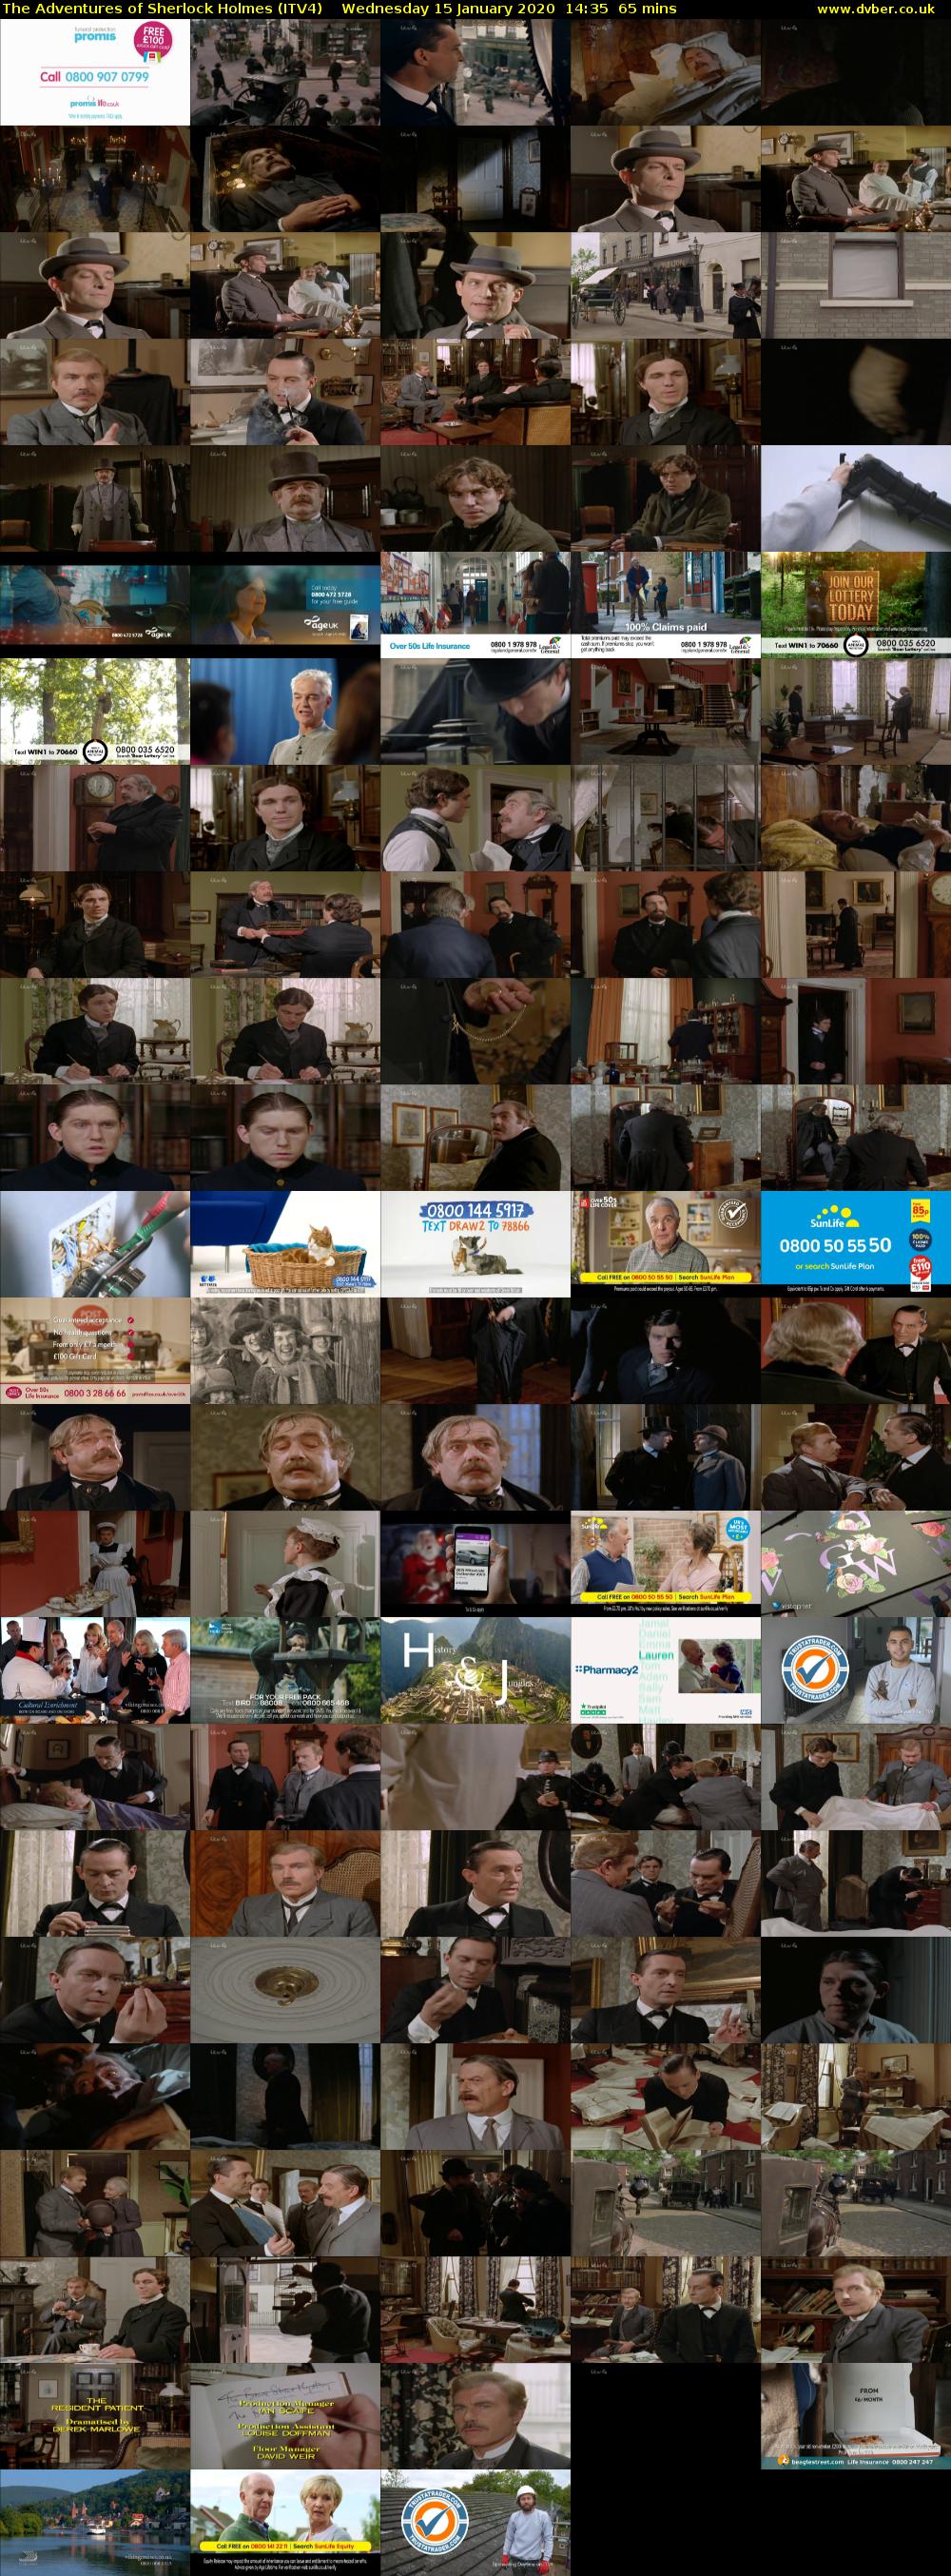 The Adventures of Sherlock Holmes (ITV4) Wednesday 15 January 2020 14:35 - 15:40